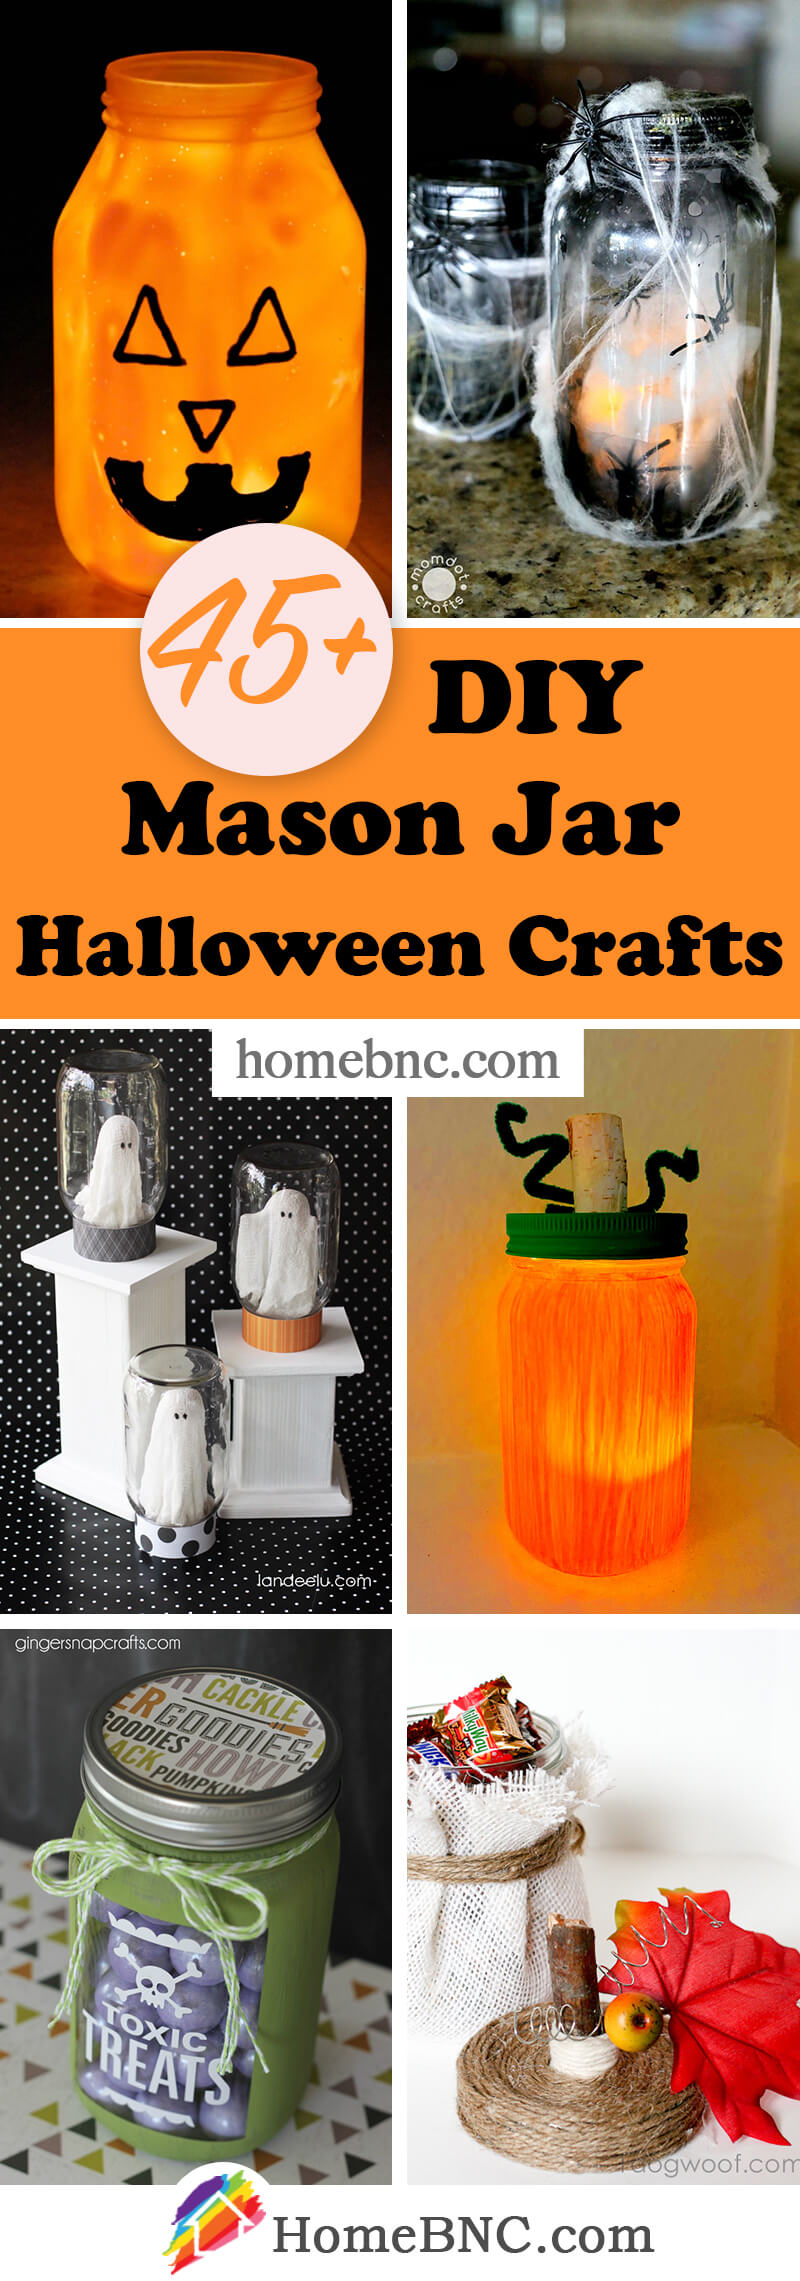 DIY Mason Jar Halloween Crafts